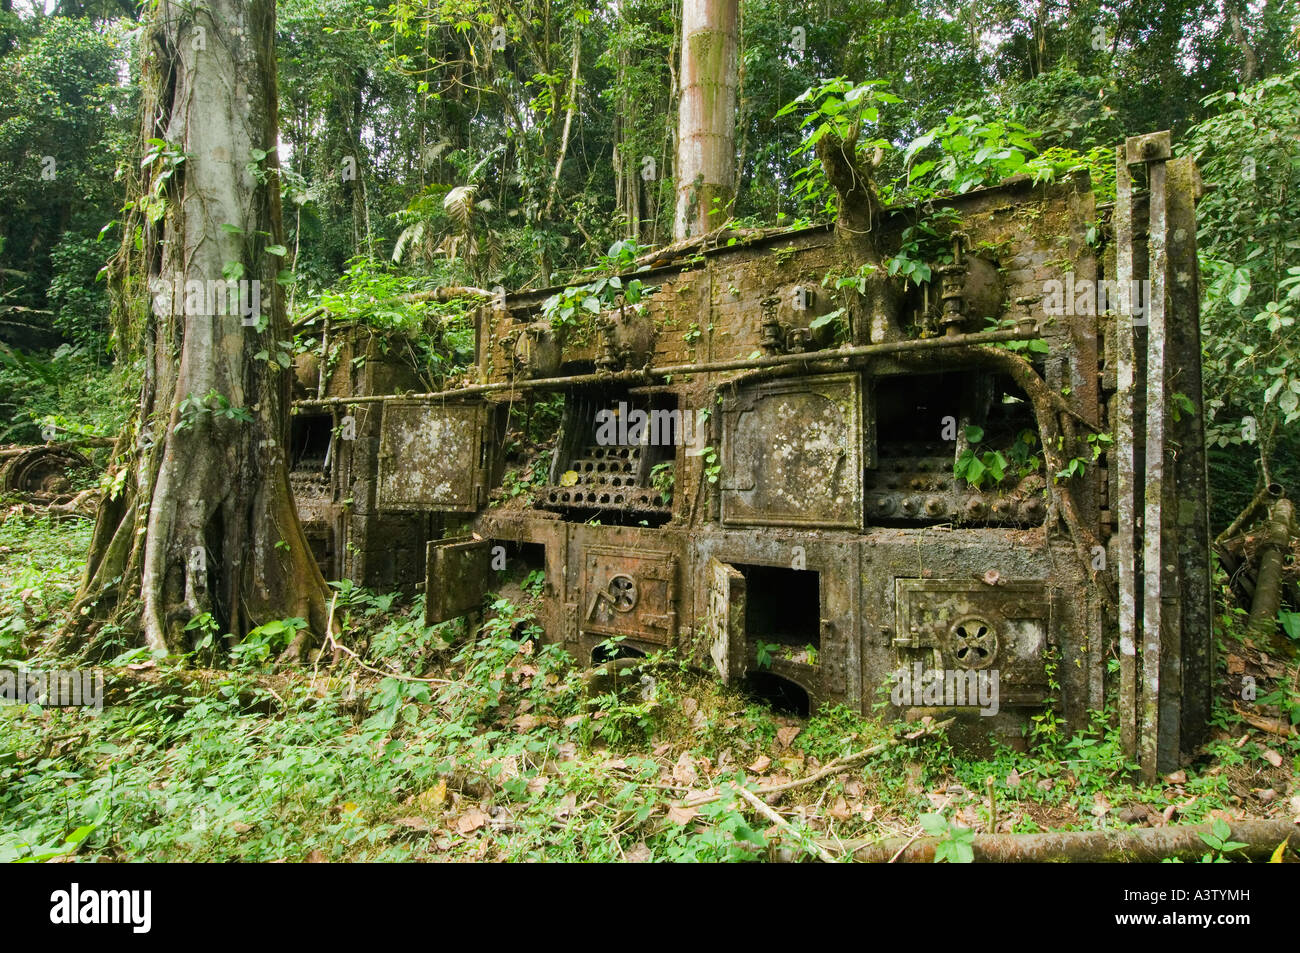 Panama, Parc national du Darien, Cana, ruines d'Espiritu Santo (Saint-Esprit) Or, équipements miniers abandonnés dans la jungle Banque D'Images